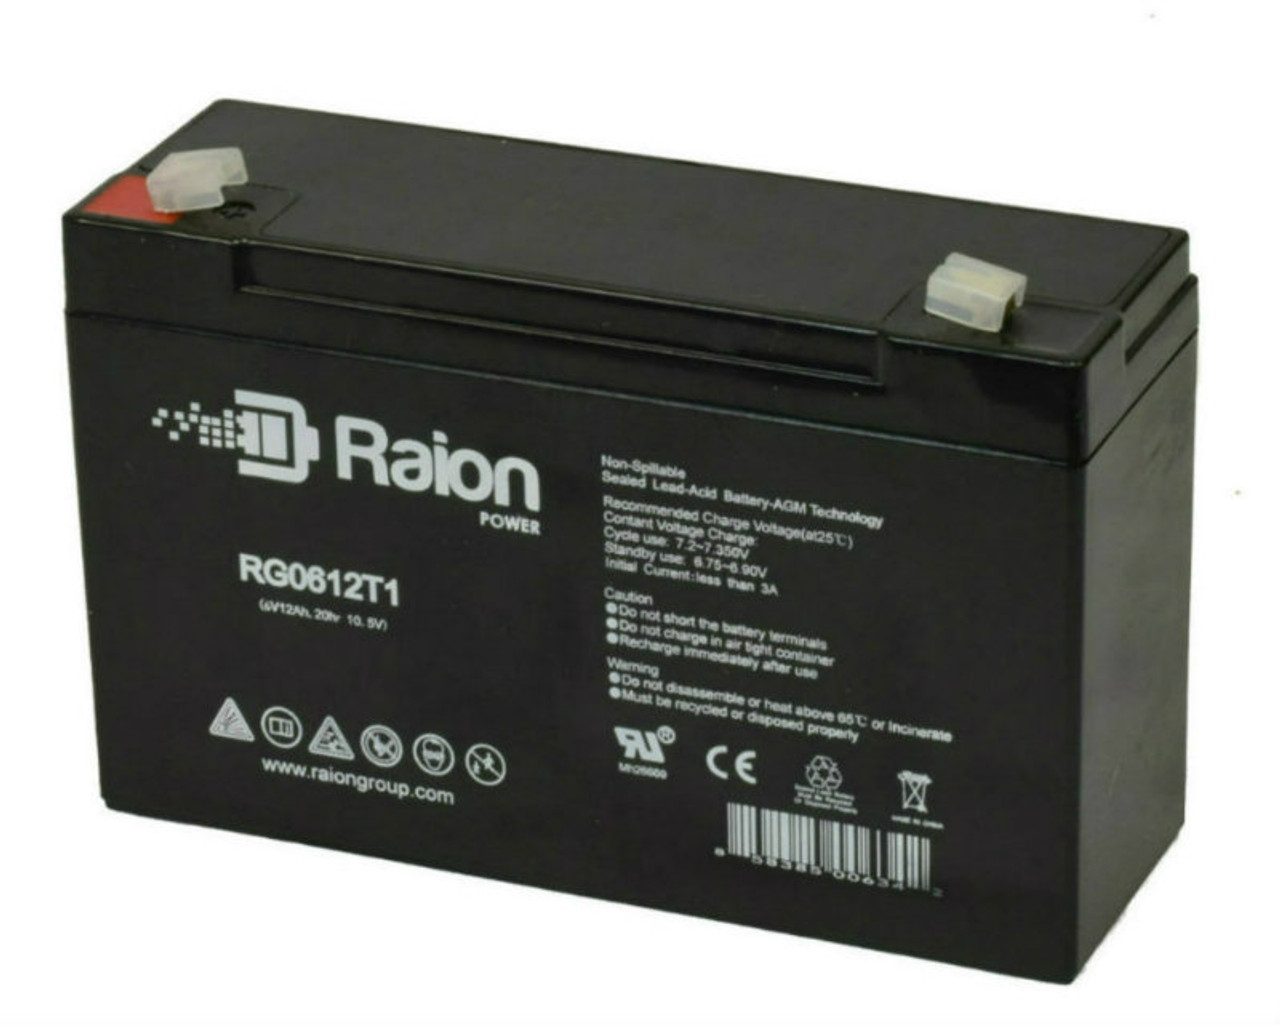 Raion Power RG06120T1 Replacement 6V 12Ah Emergency Light Battery for Sentry Lite PM695